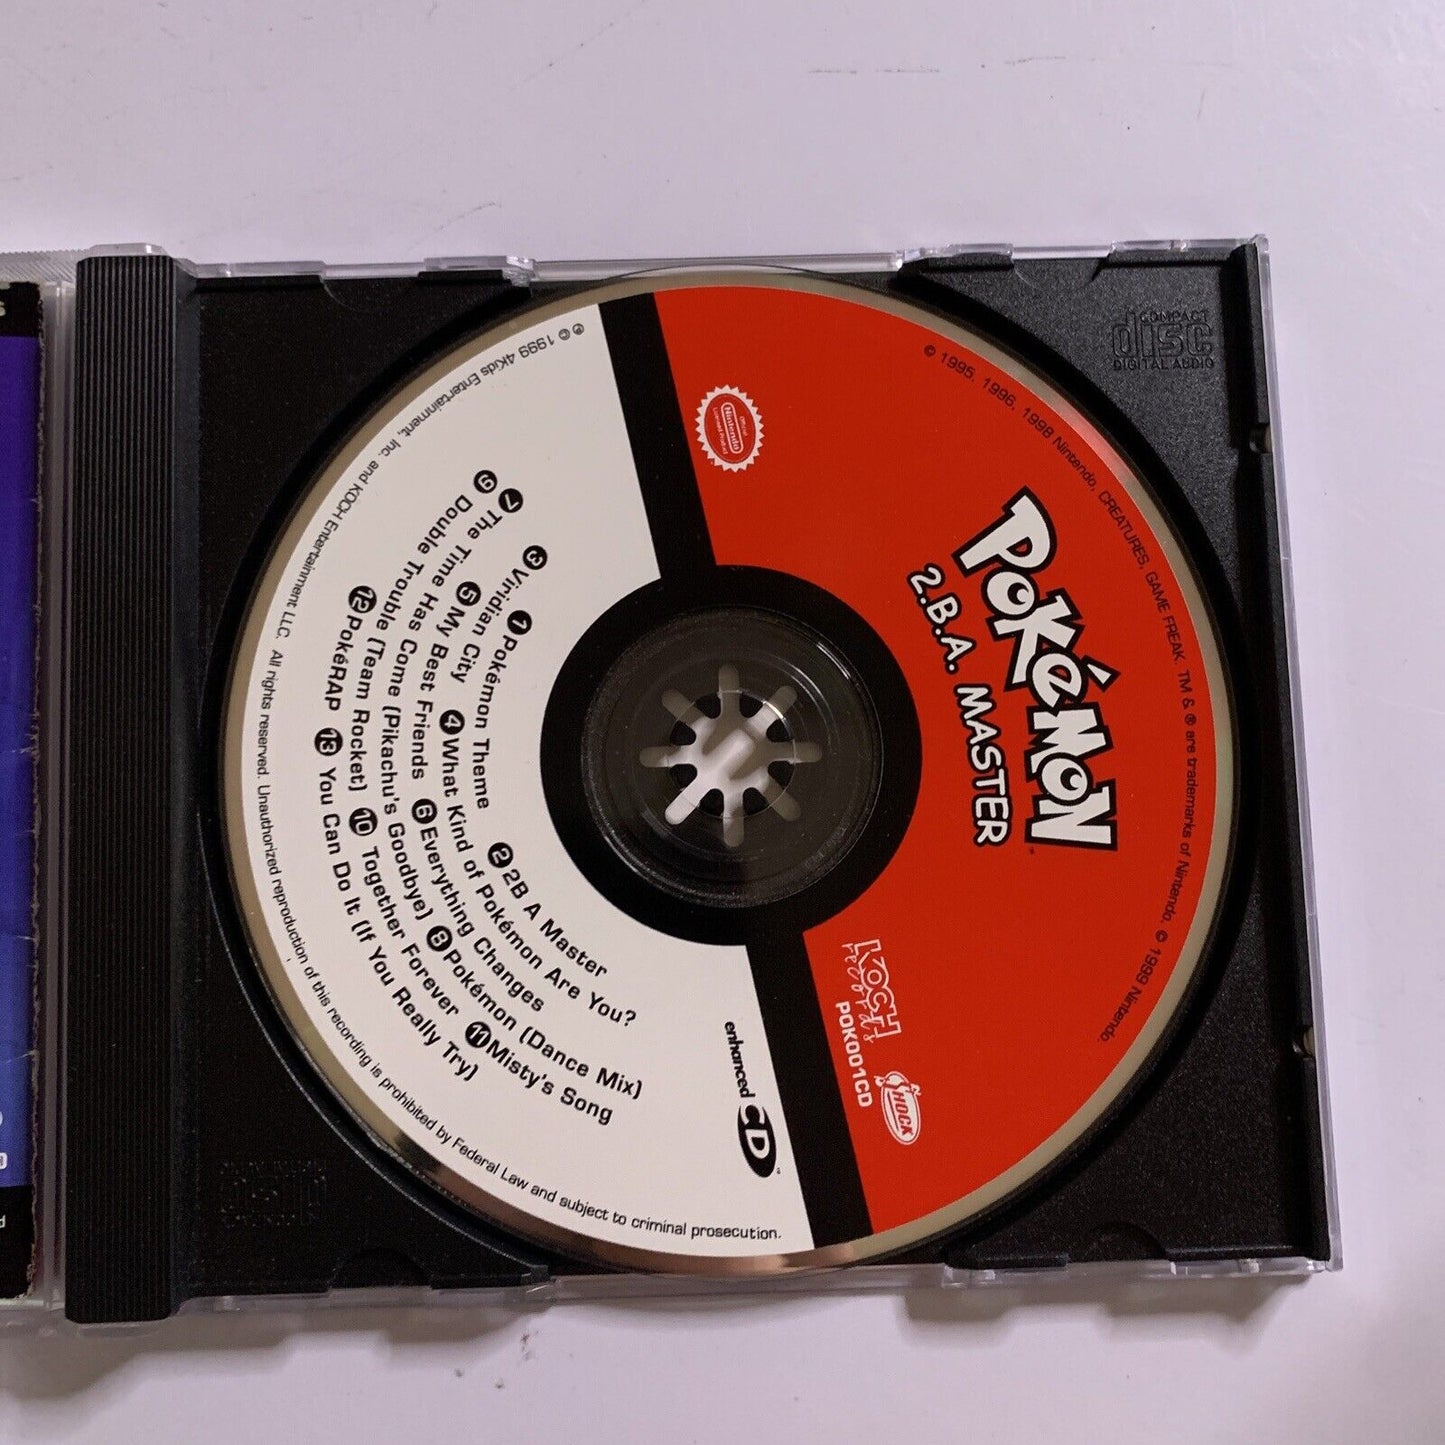 Pokemon 2.B.A Master (CD Enhanced, 1999) Music from TV Series